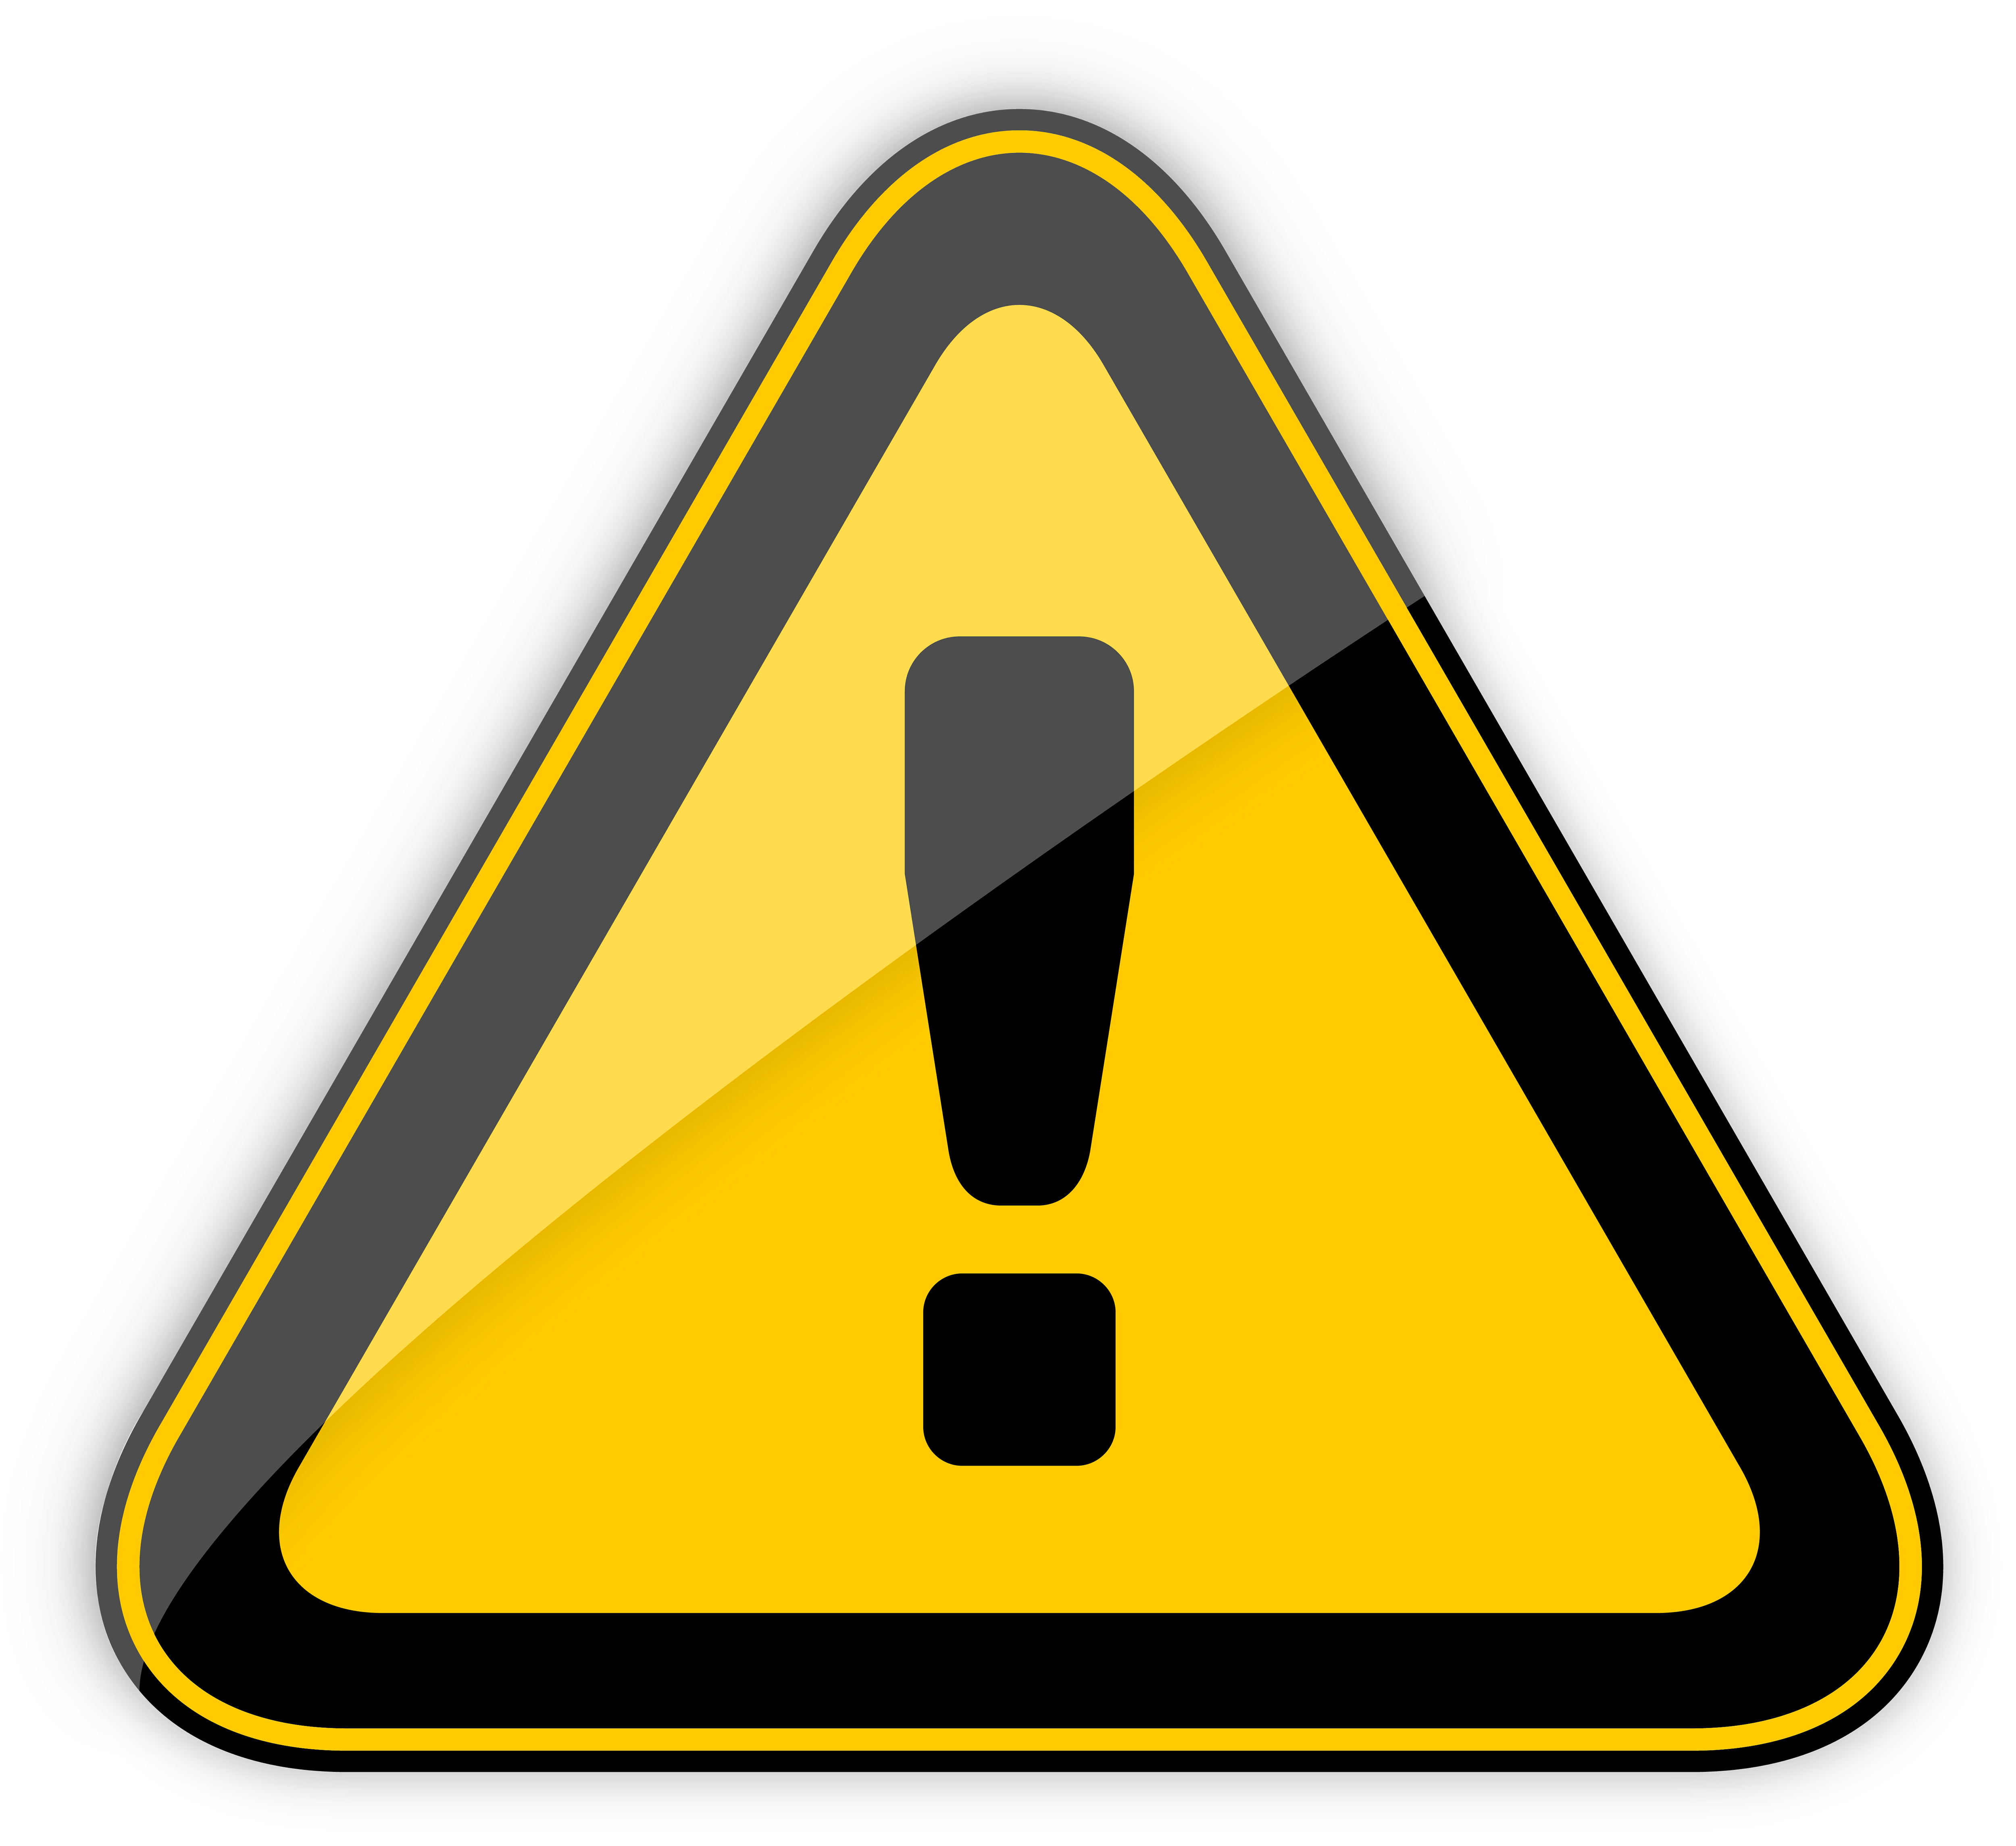 Danger Warning Sign PNG Clipart - Best WEB Clipart